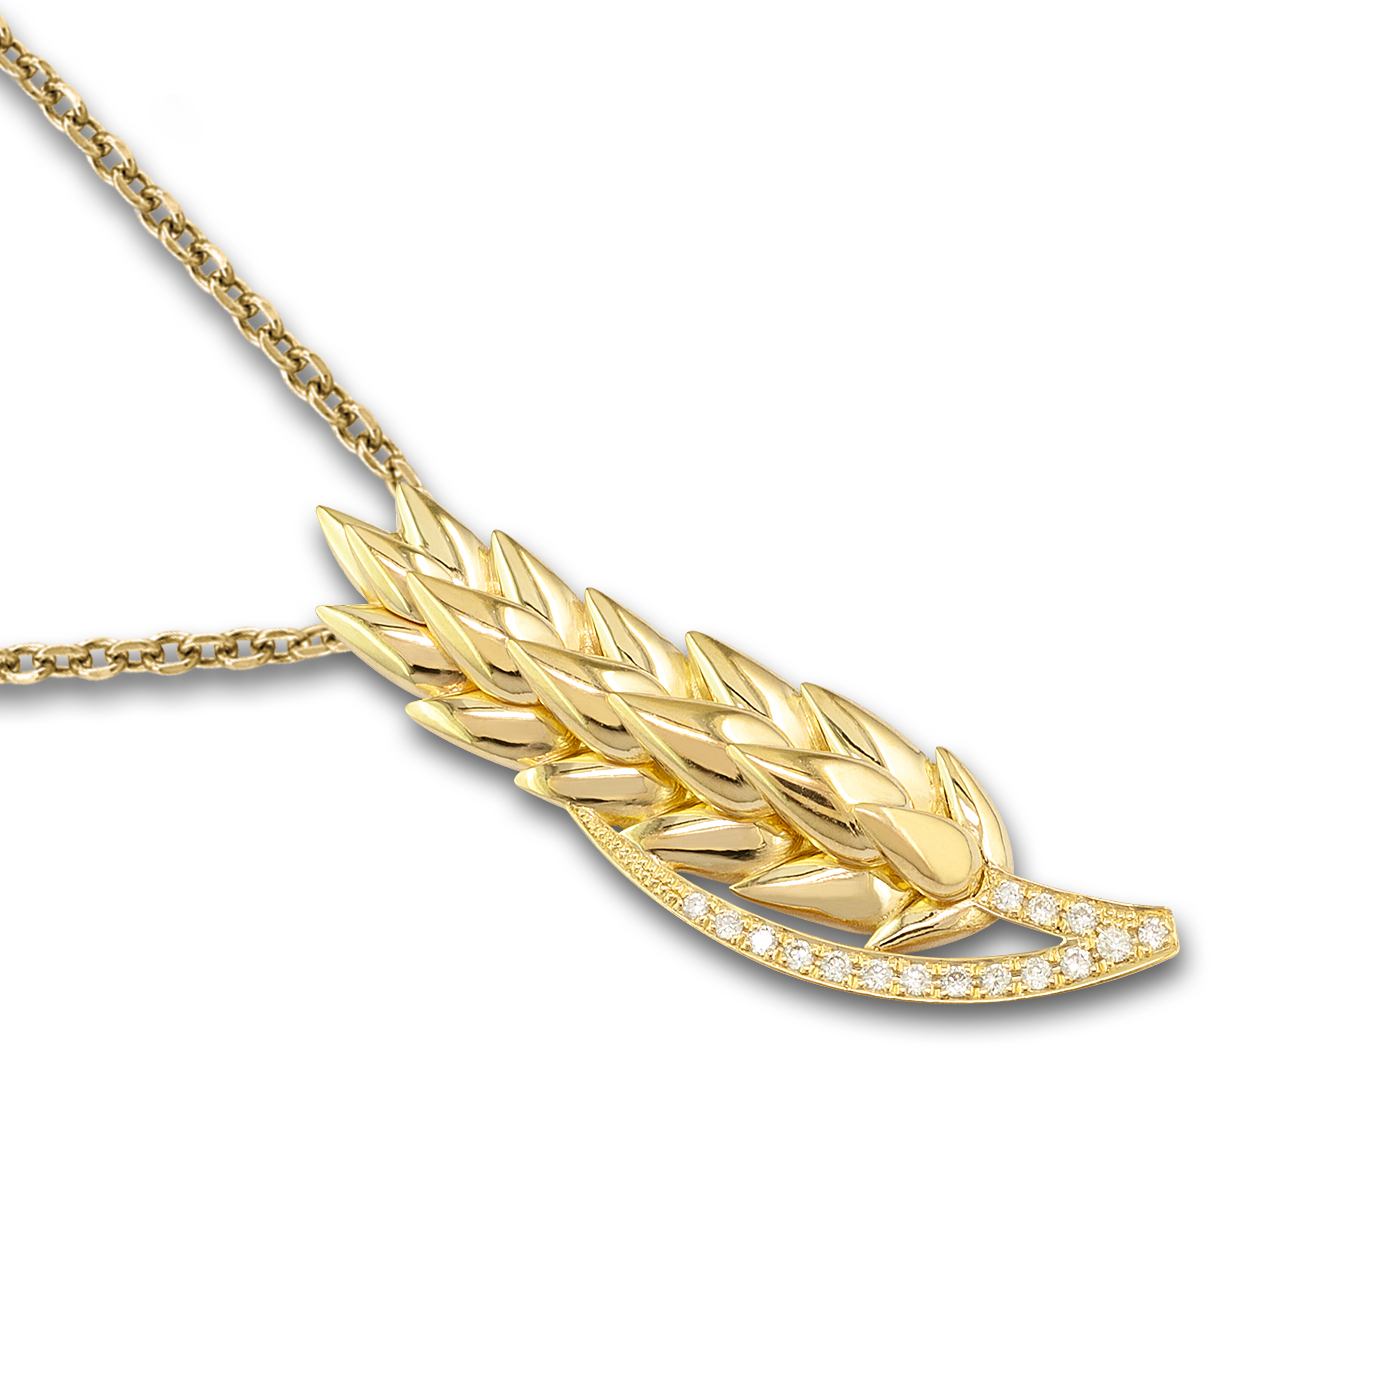 Poseidon's Trident Gold Pendant with diamonds